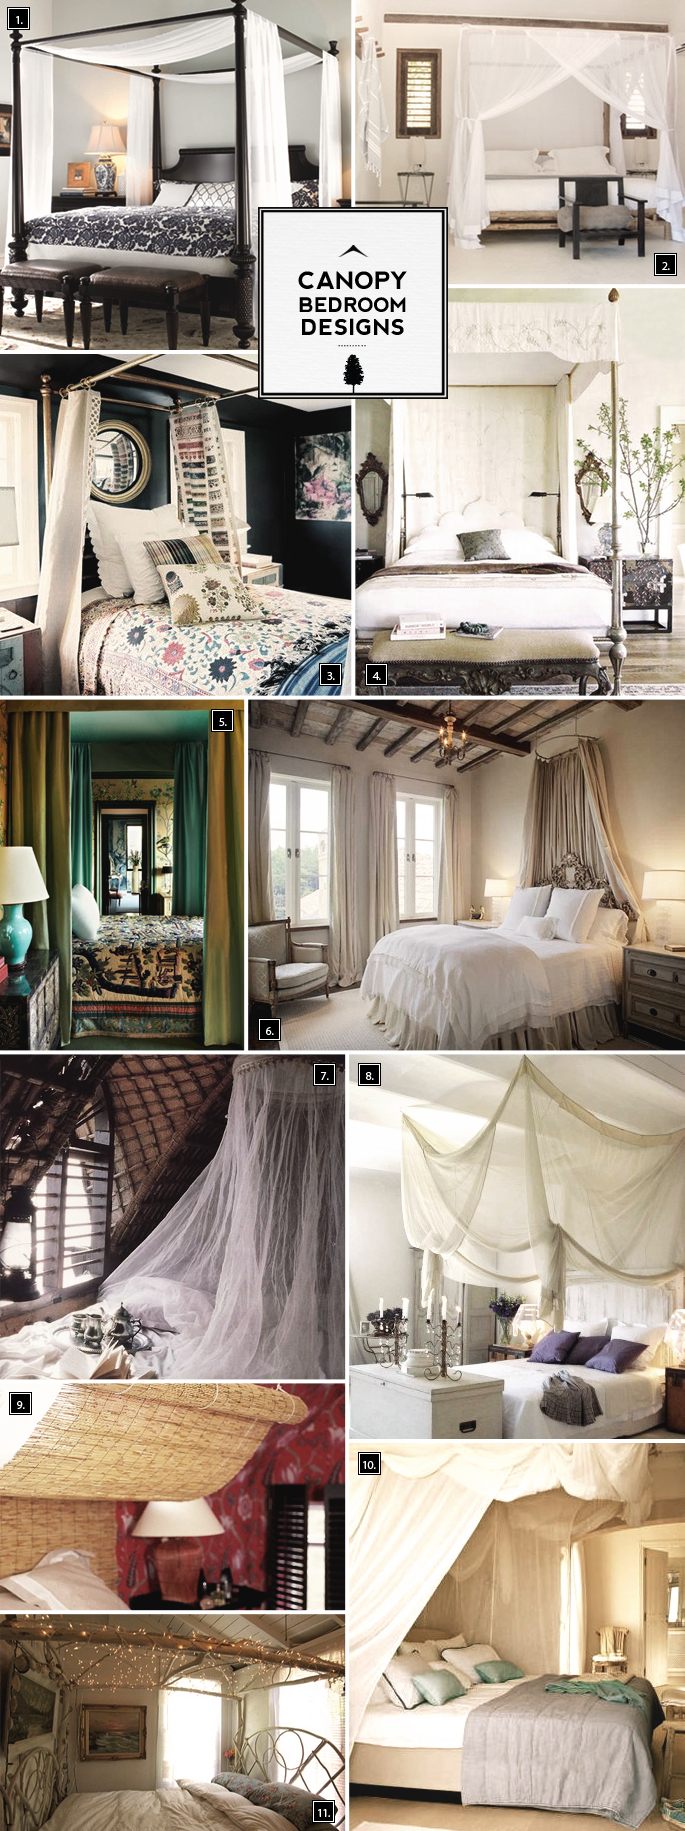 Canopy Bedroom Designs